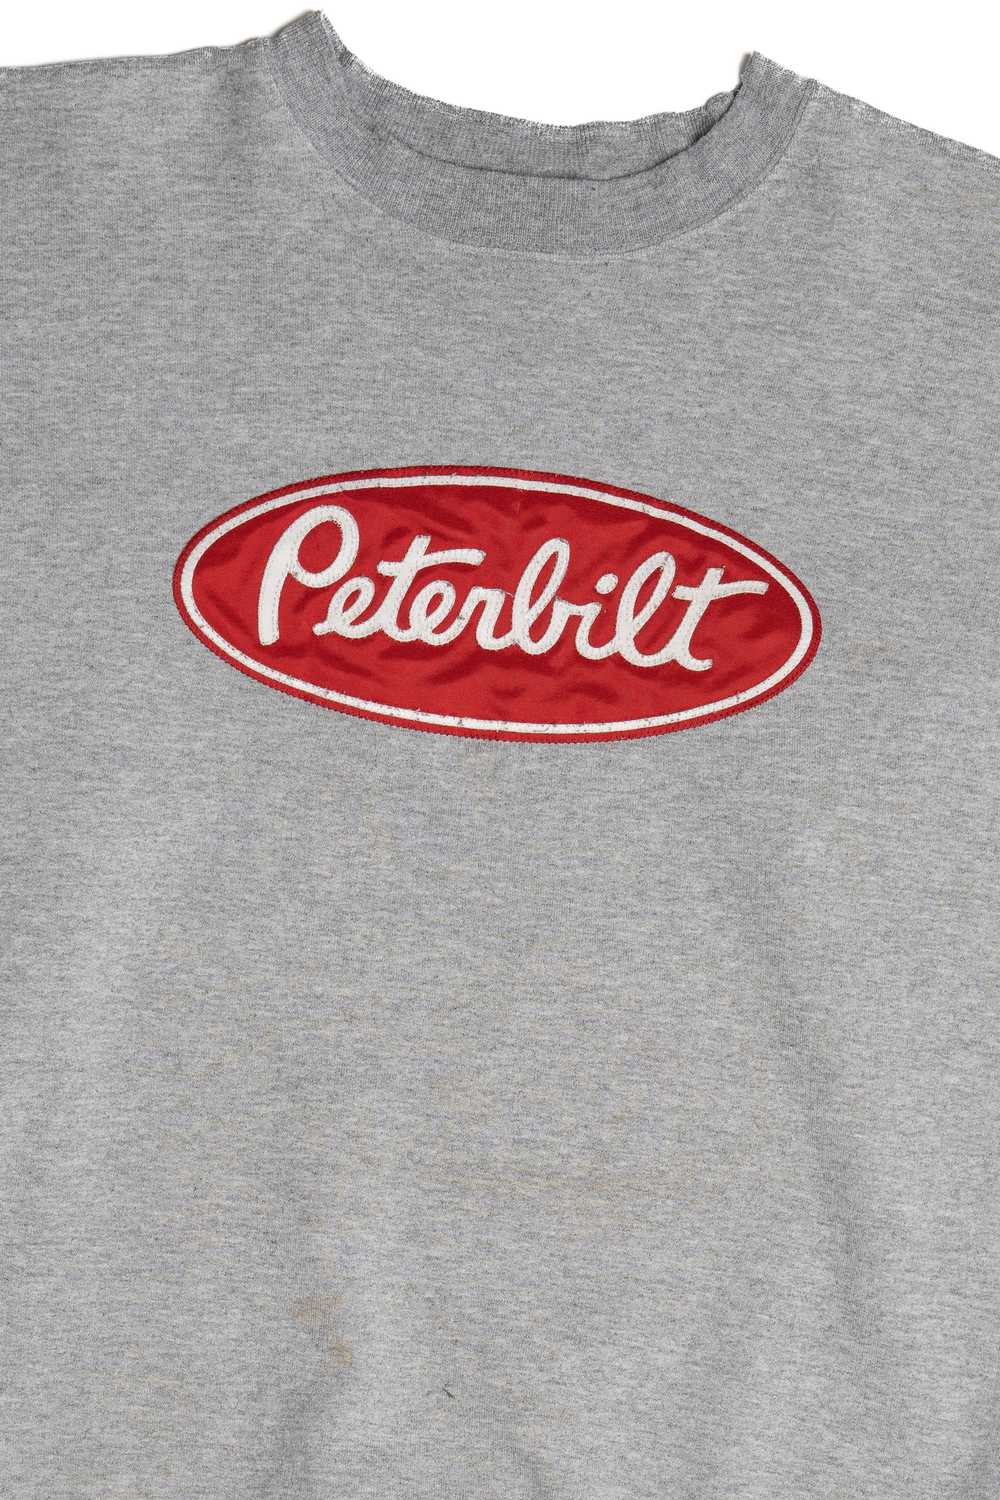 Peterbilt Logo Sweatshirt - image 2